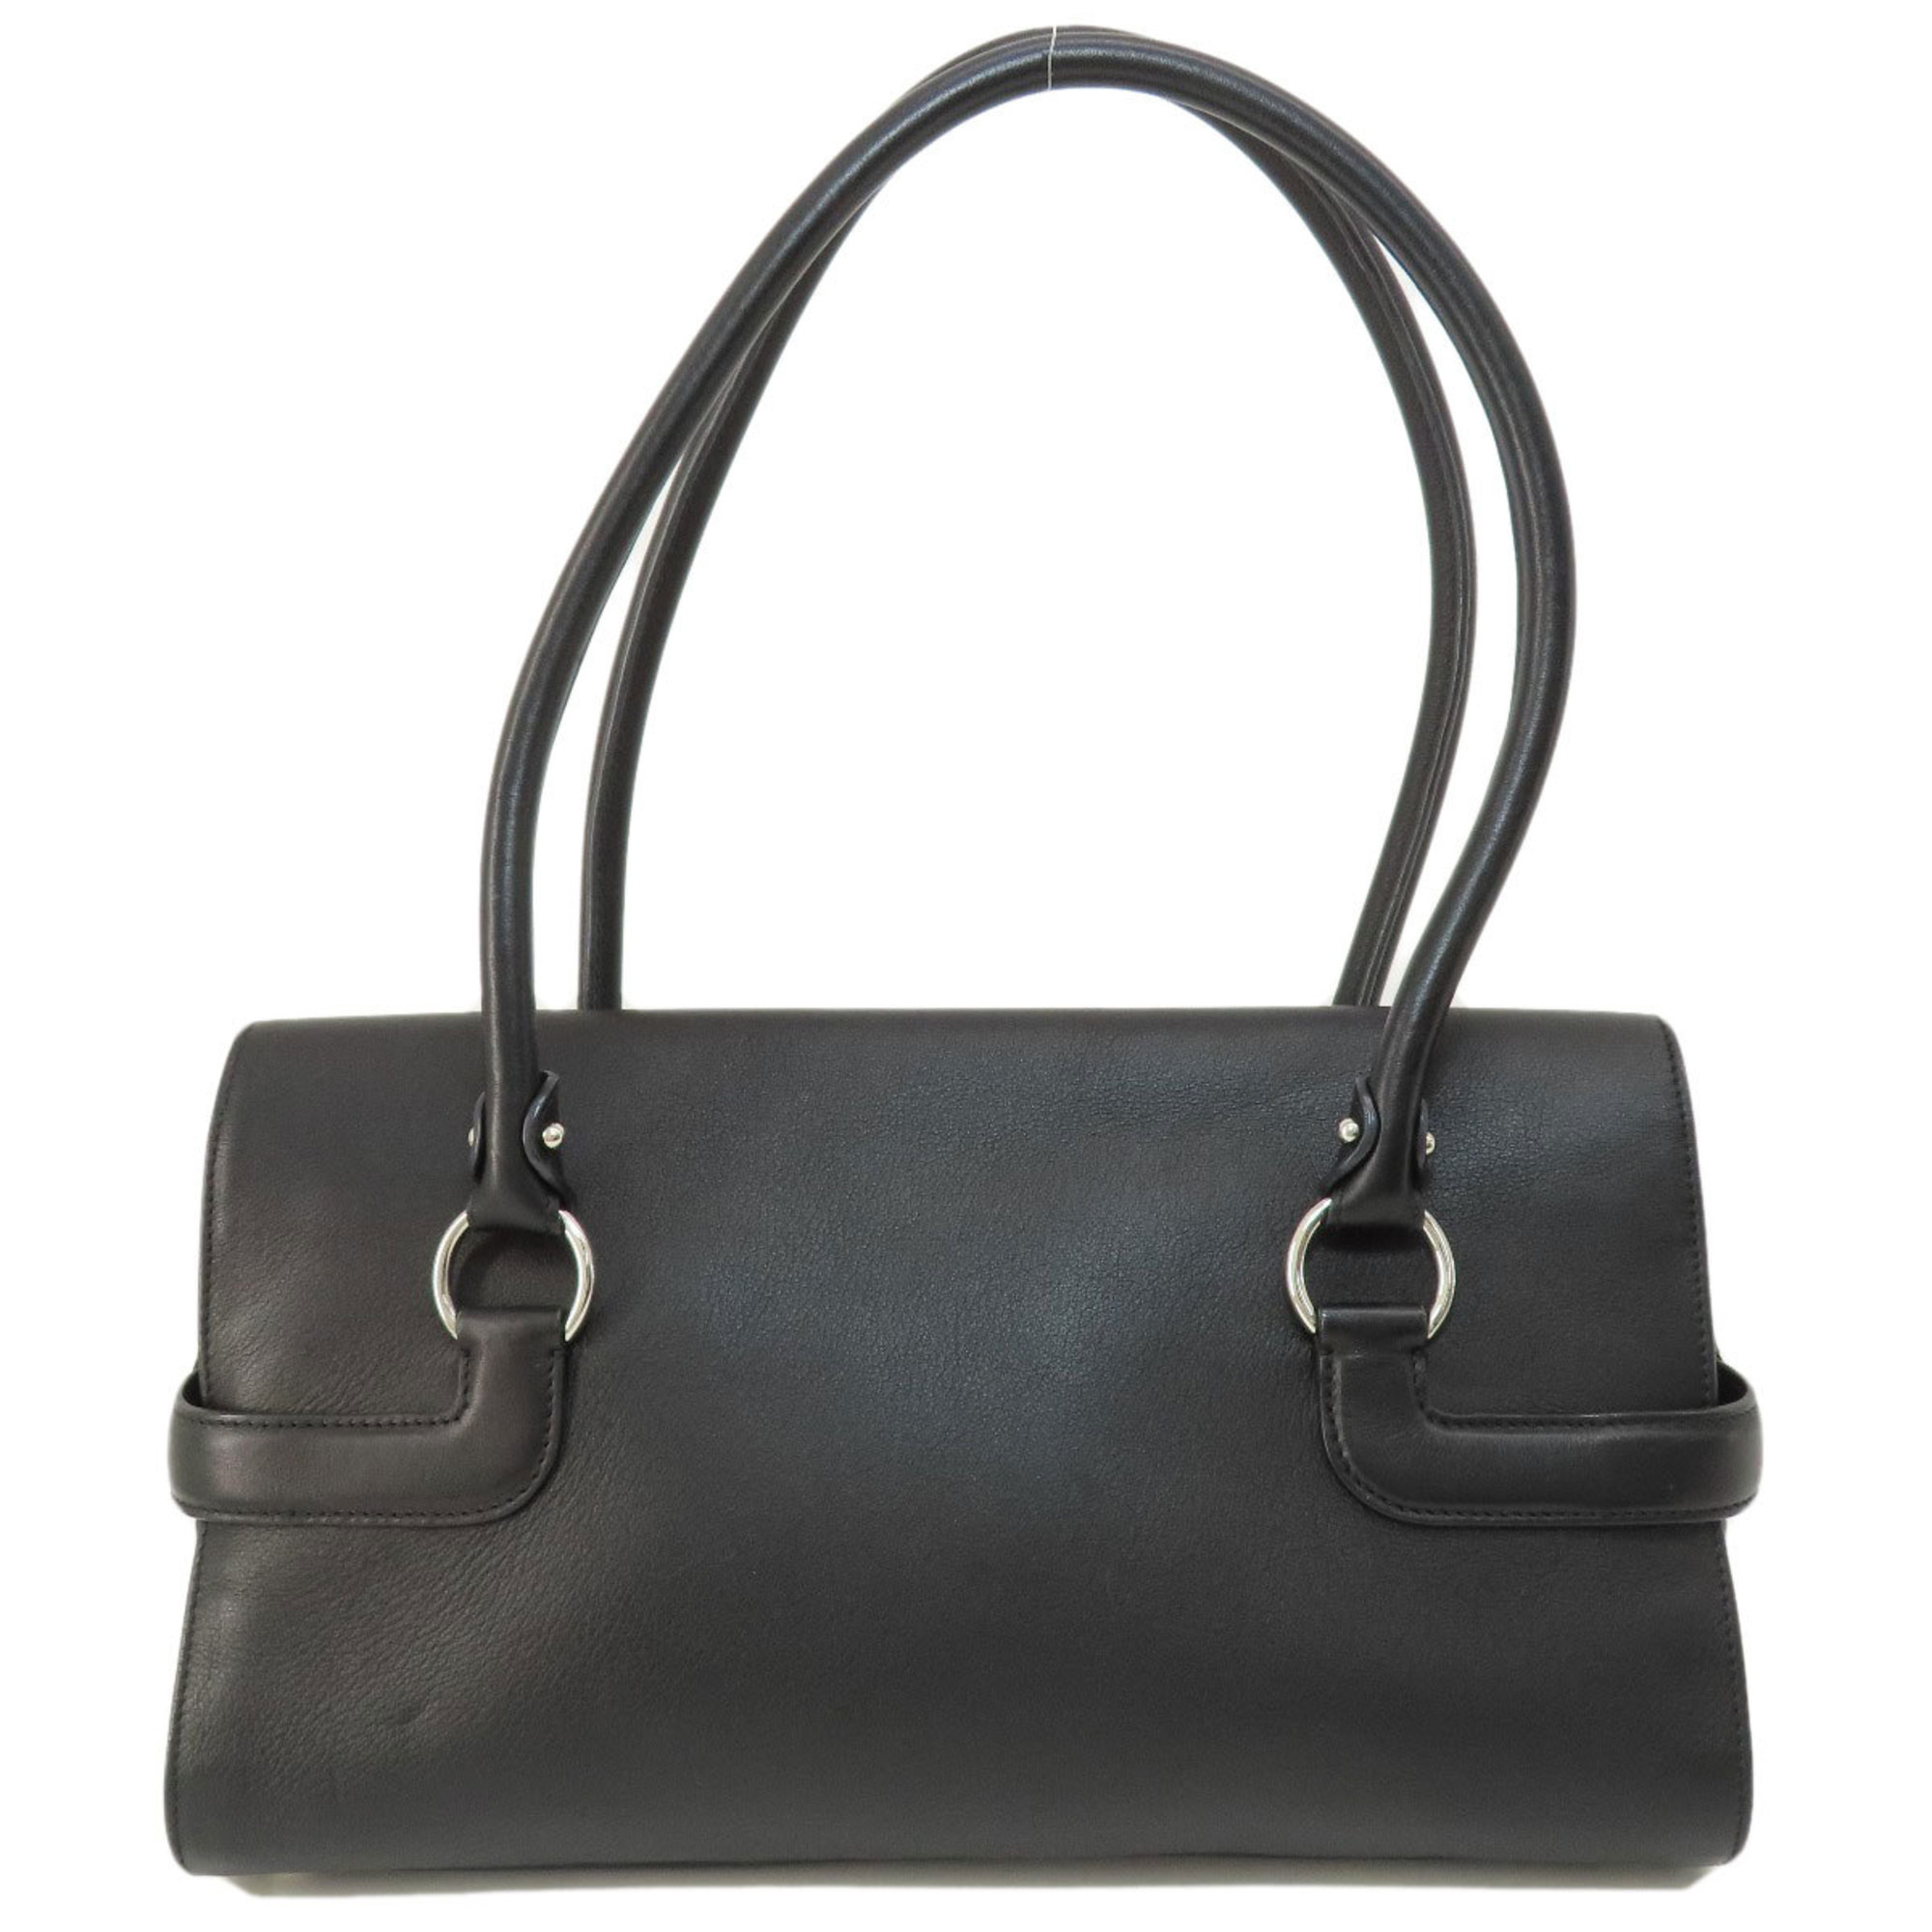 Salvatore Ferragamo Gancini hardware handbag leather women's